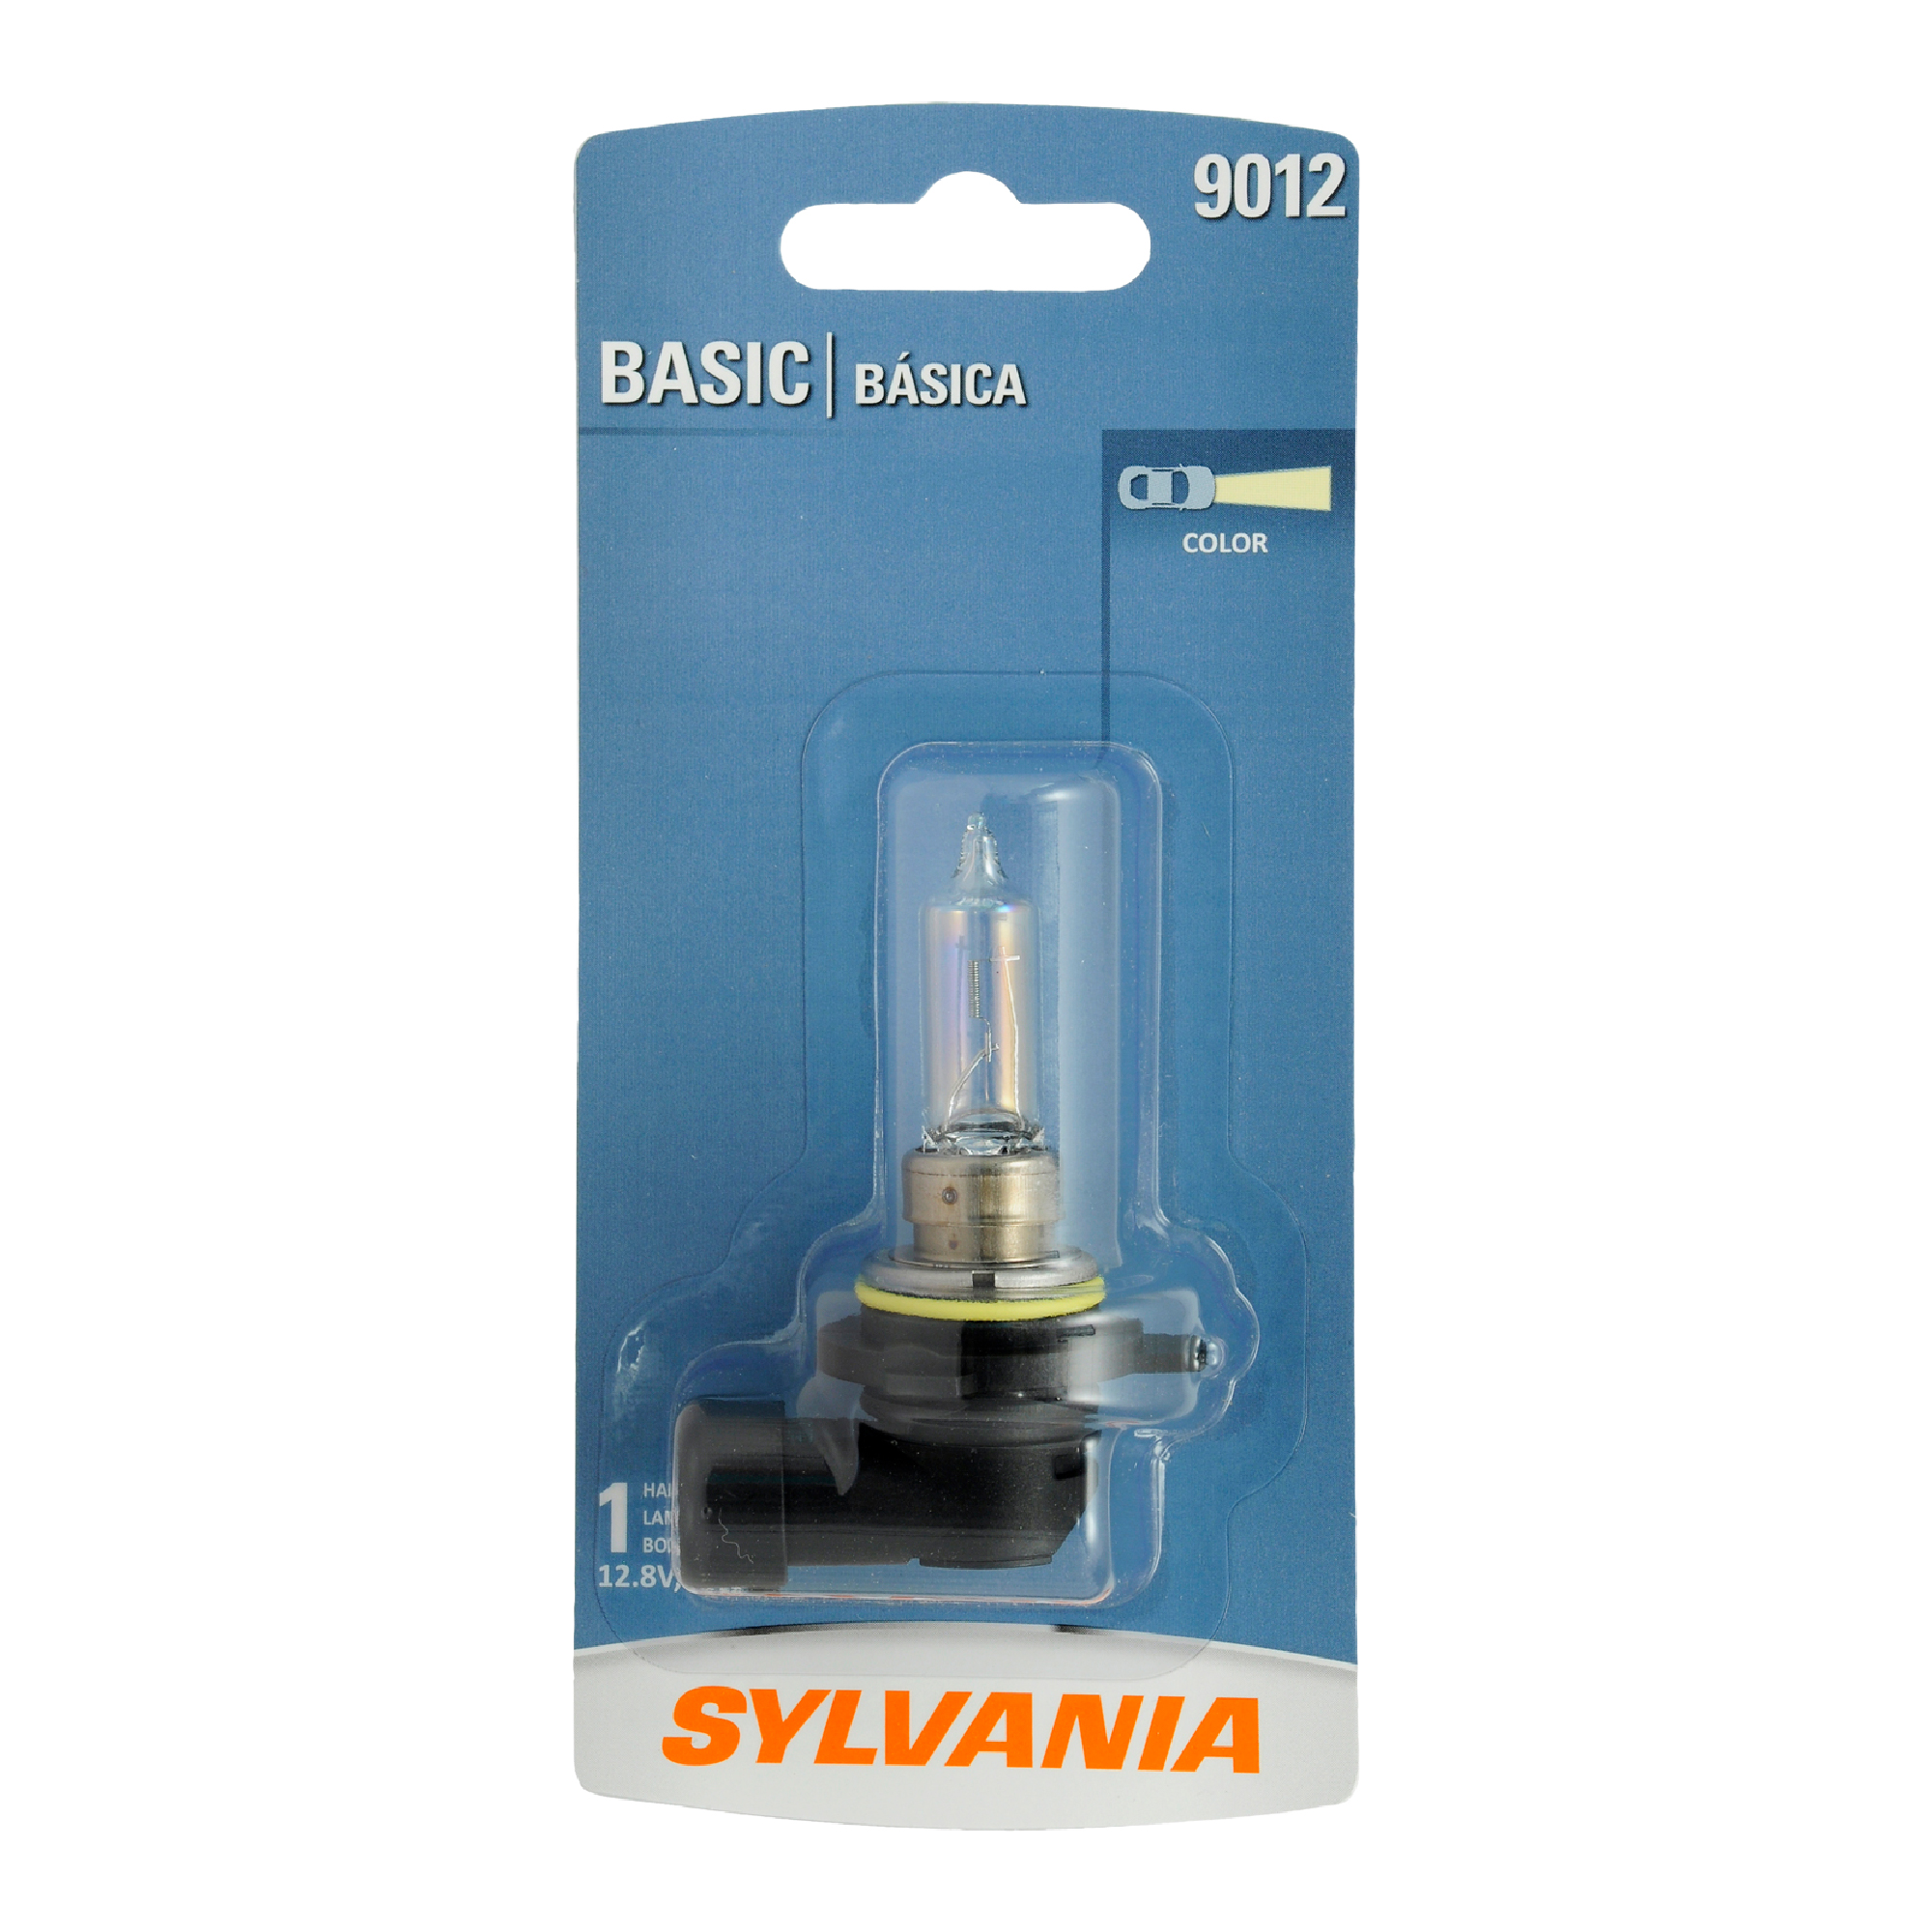 SYLVANIA 9012 Basic Halogen Headlight Bulb, 1 Pack